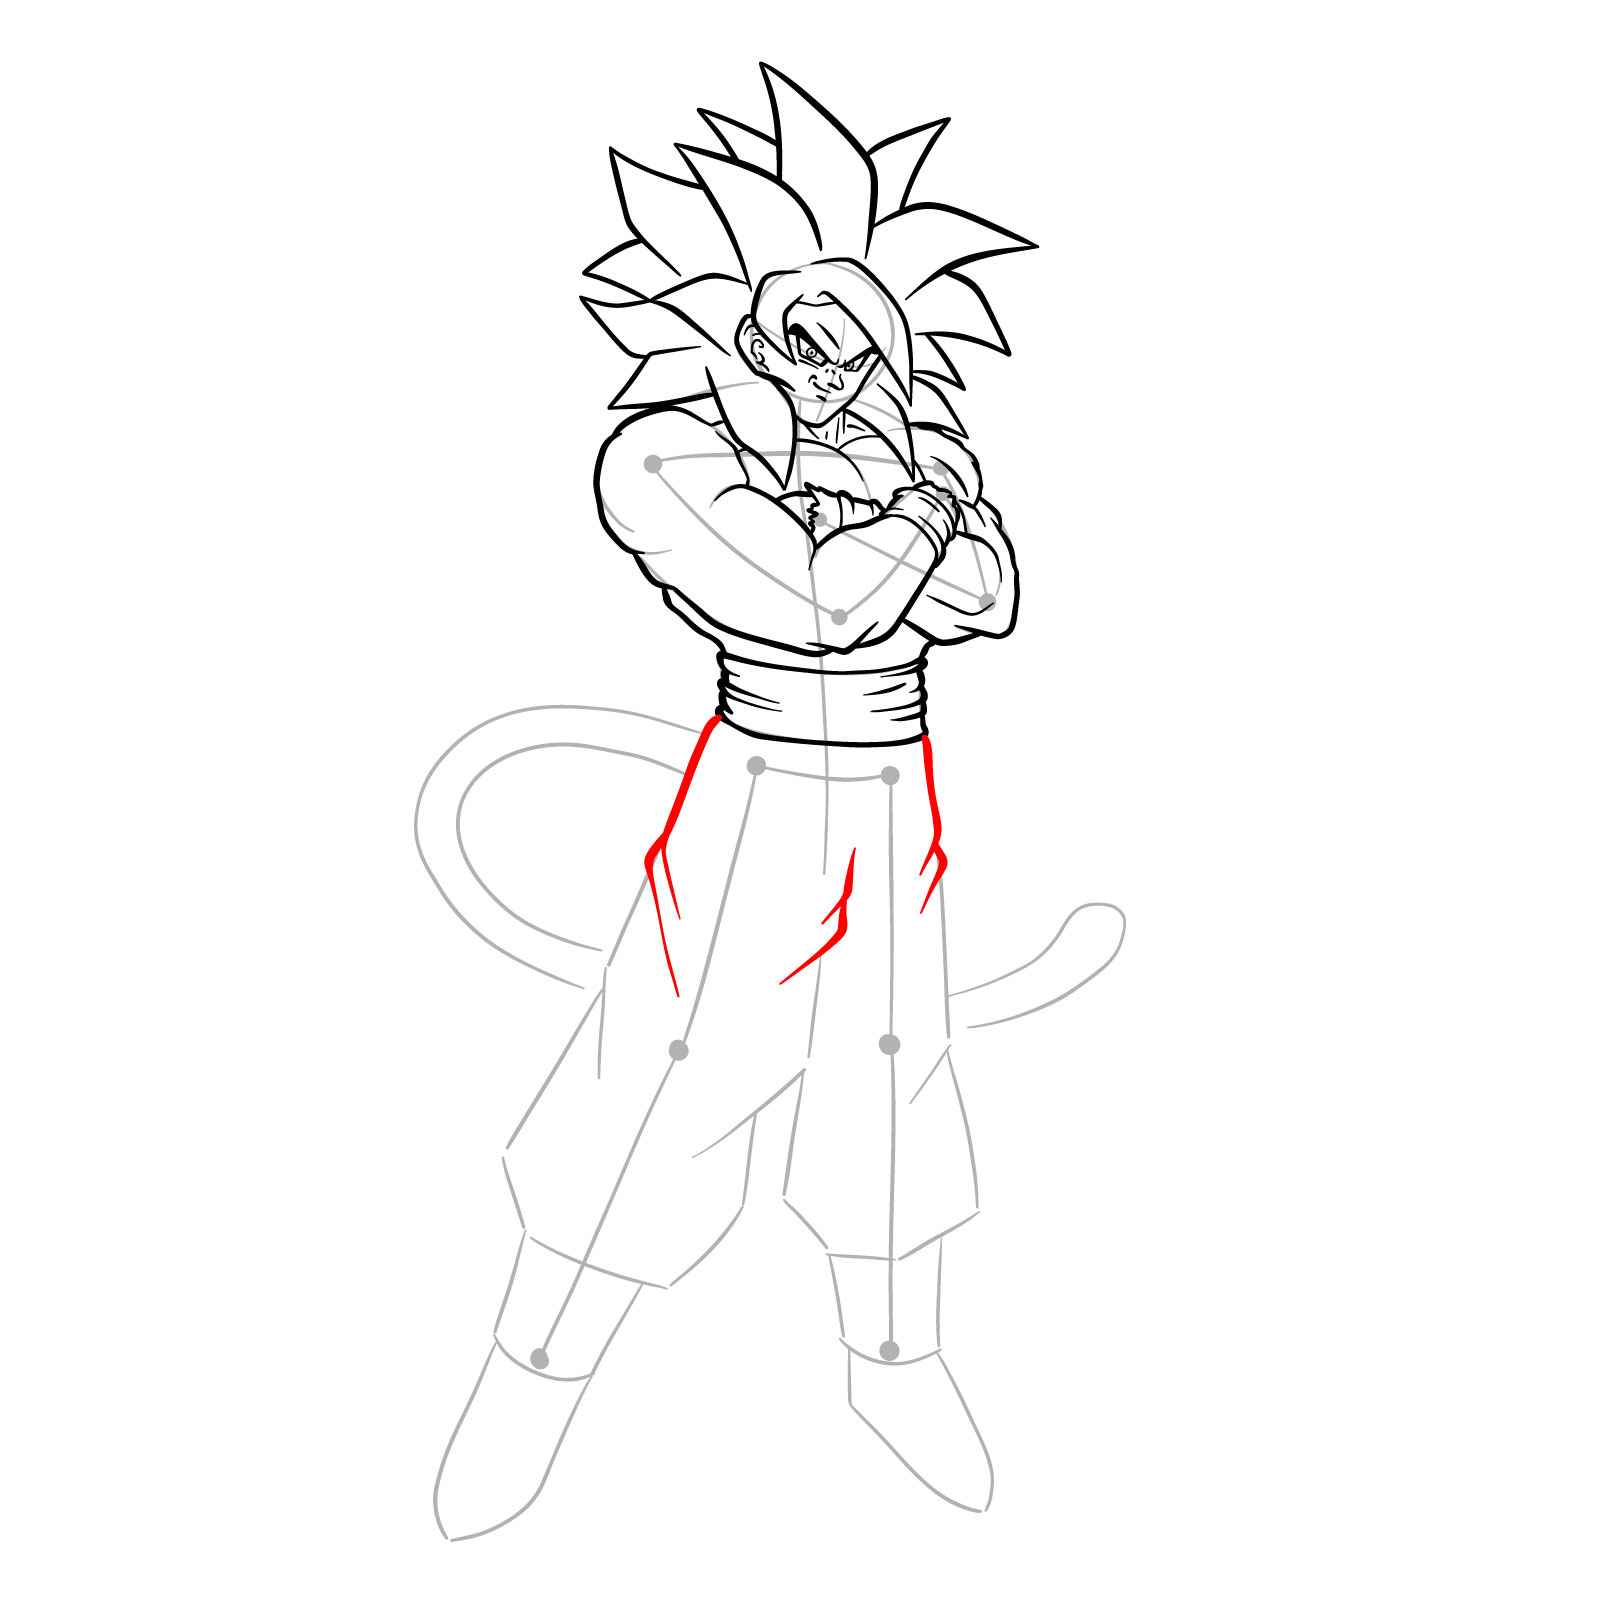 How to tát draw Goku Super Saiyan 4 - step 23